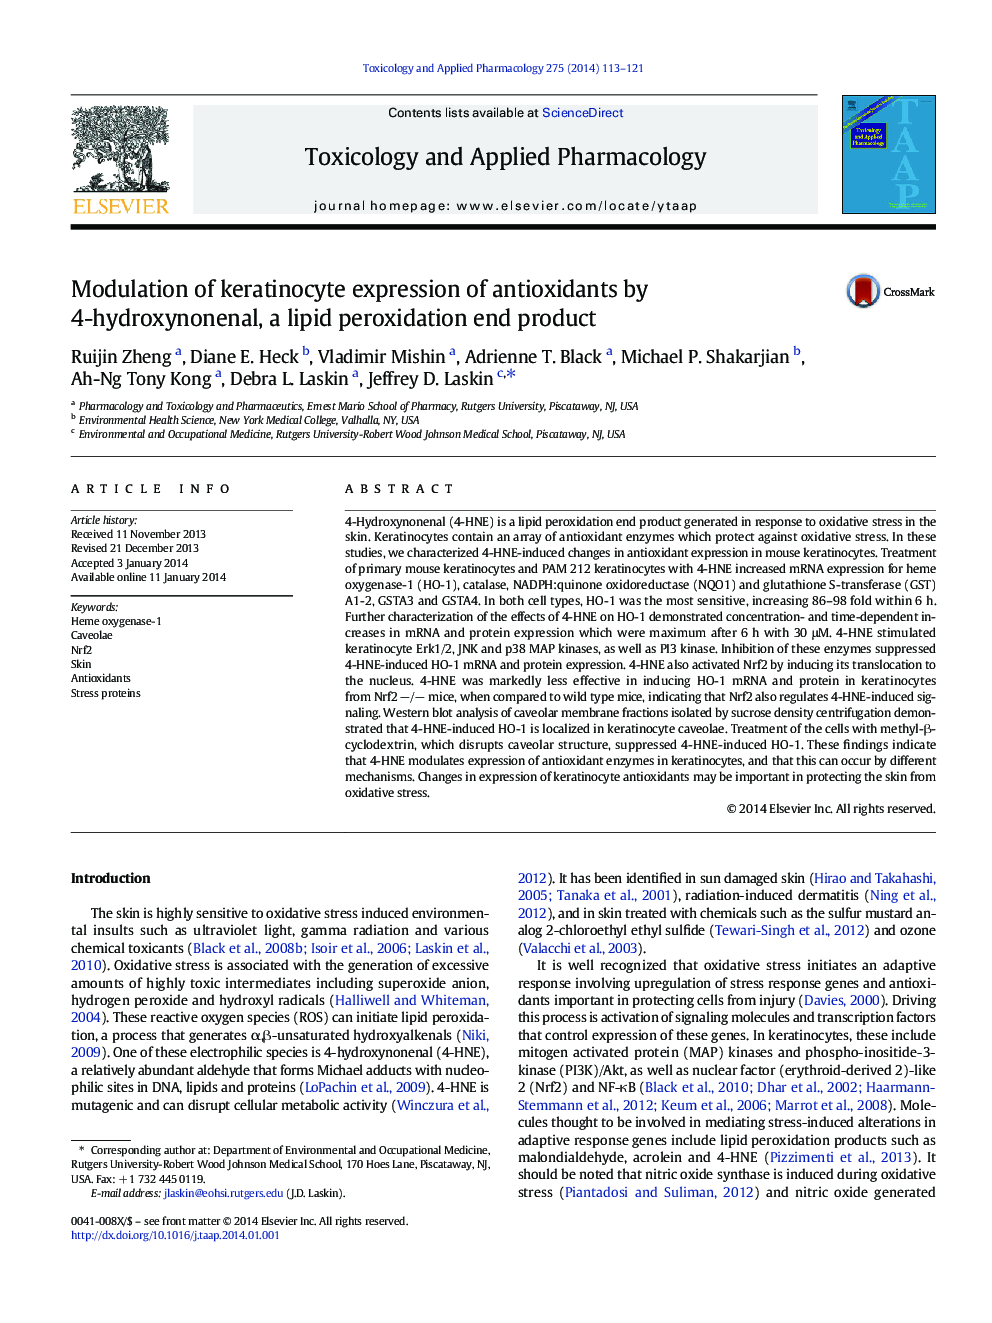 Modulation of keratinocyte expression of antioxidants by 4-hydroxynonenal, a lipid peroxidation end product